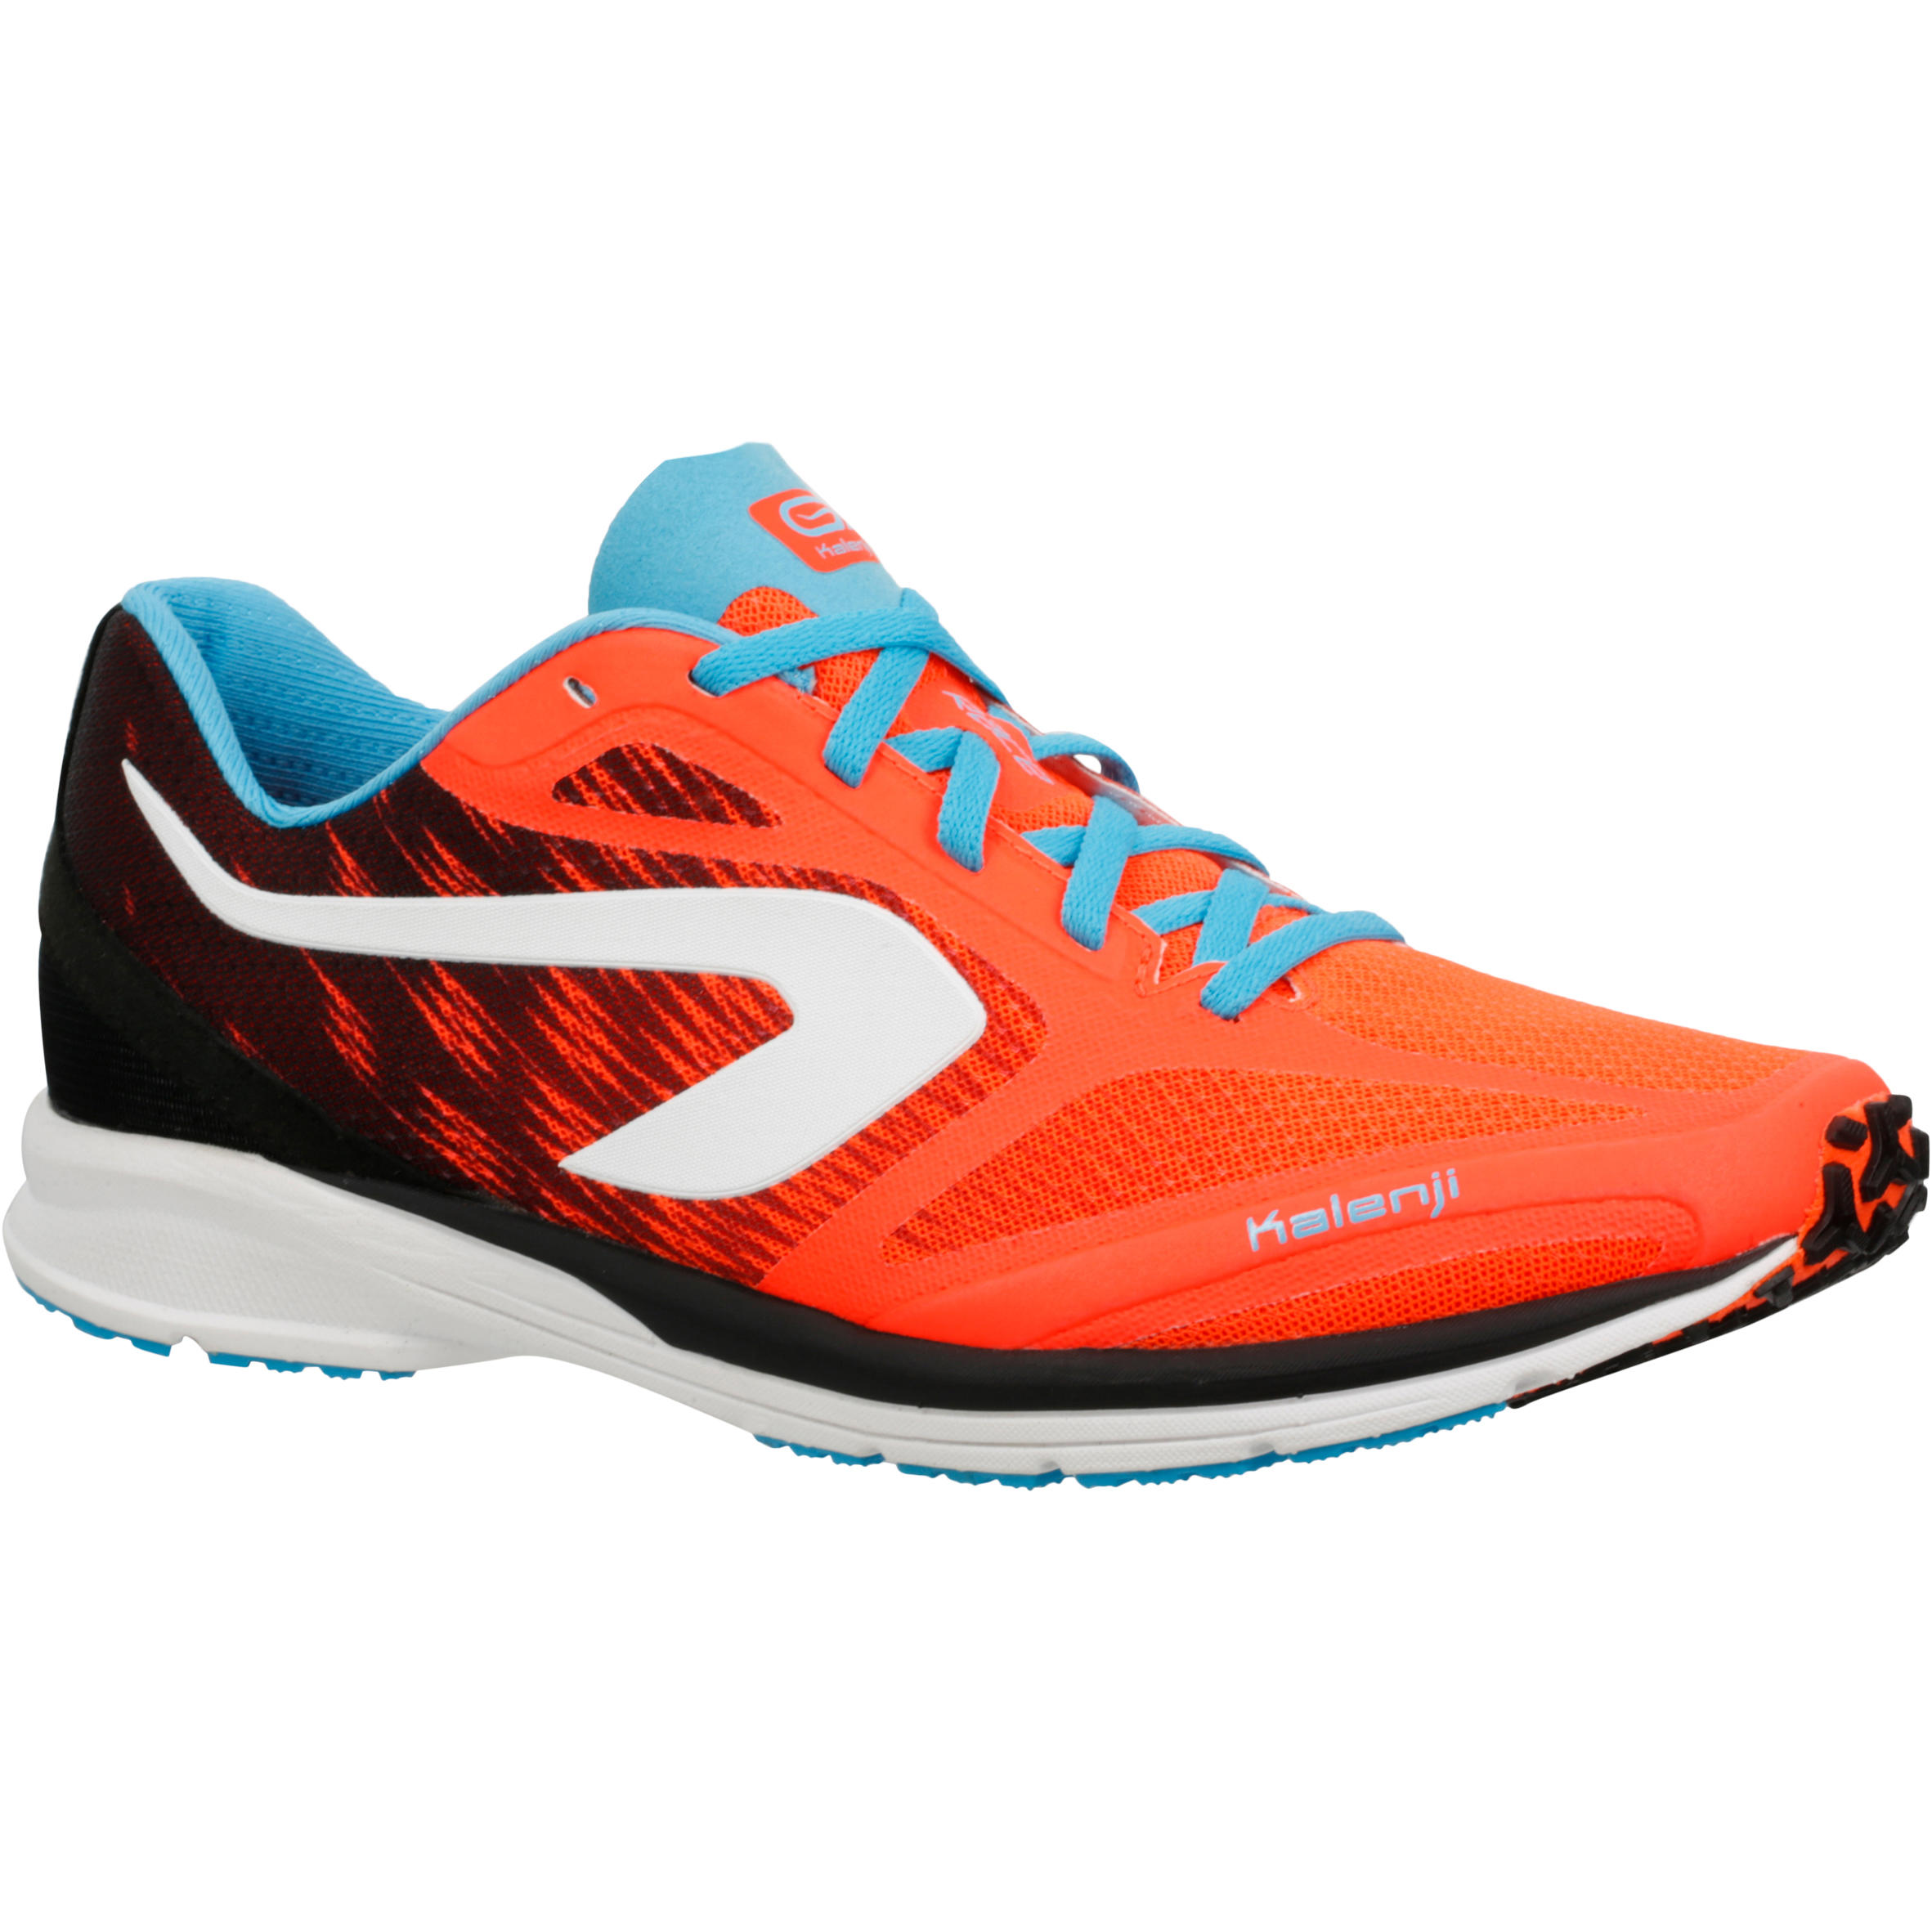 KALENJI Kiprace Men's Competition Running Shoes - Orange Blue